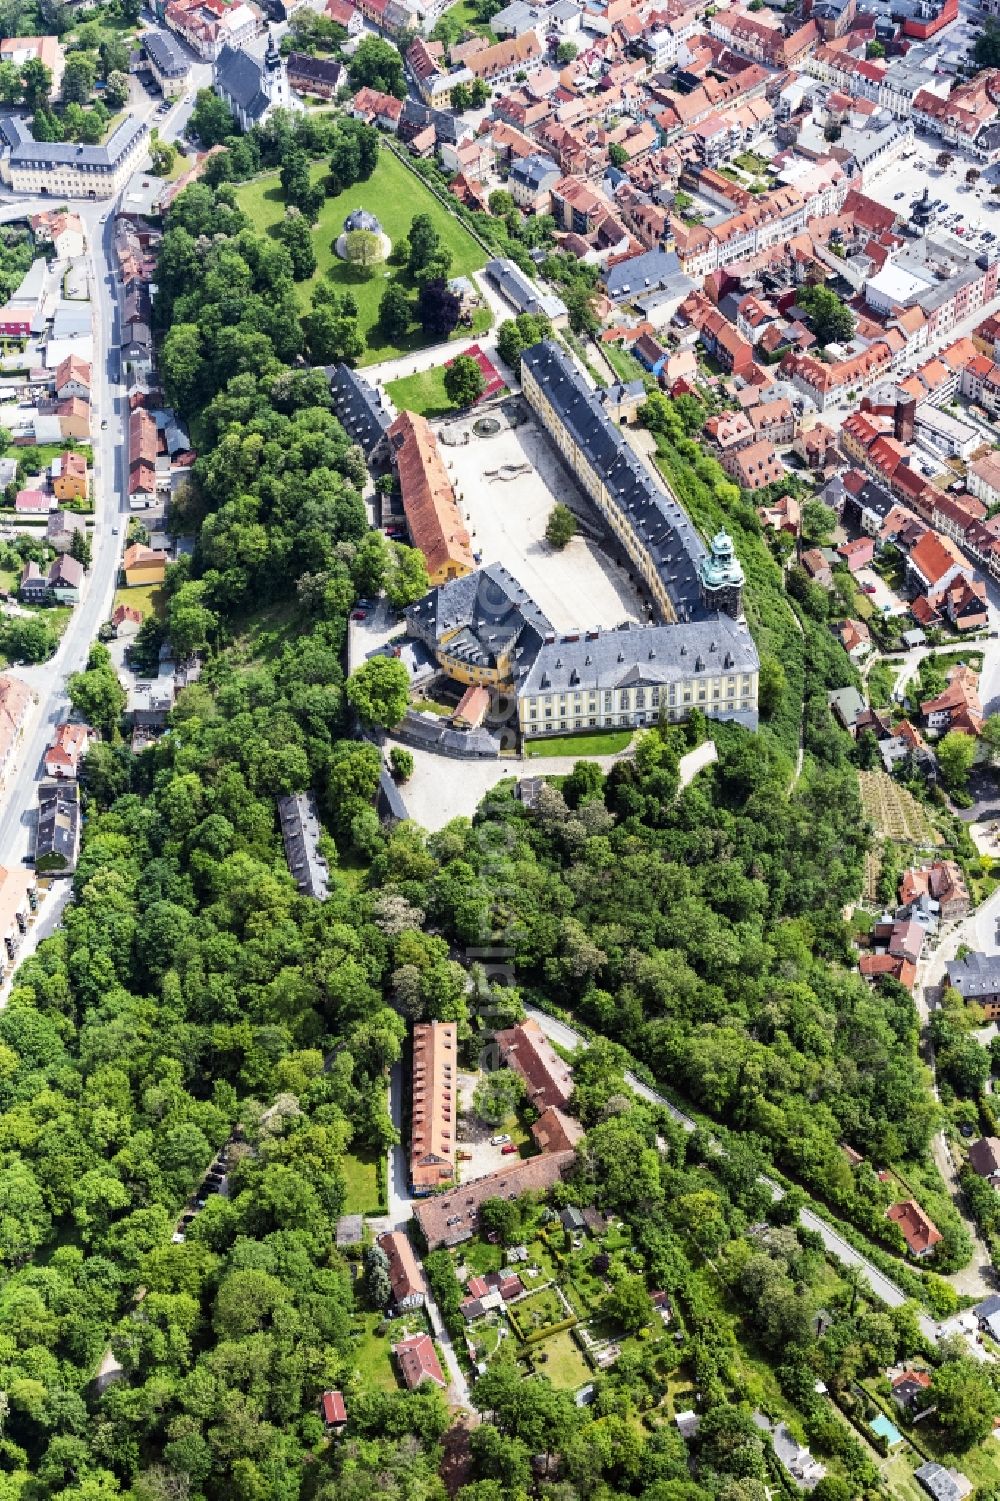 Aerial image Rudolstadt - Heidecksburg, the former residence of the princes of Schwarzburg in the center of Rudolstadt in Thuringia